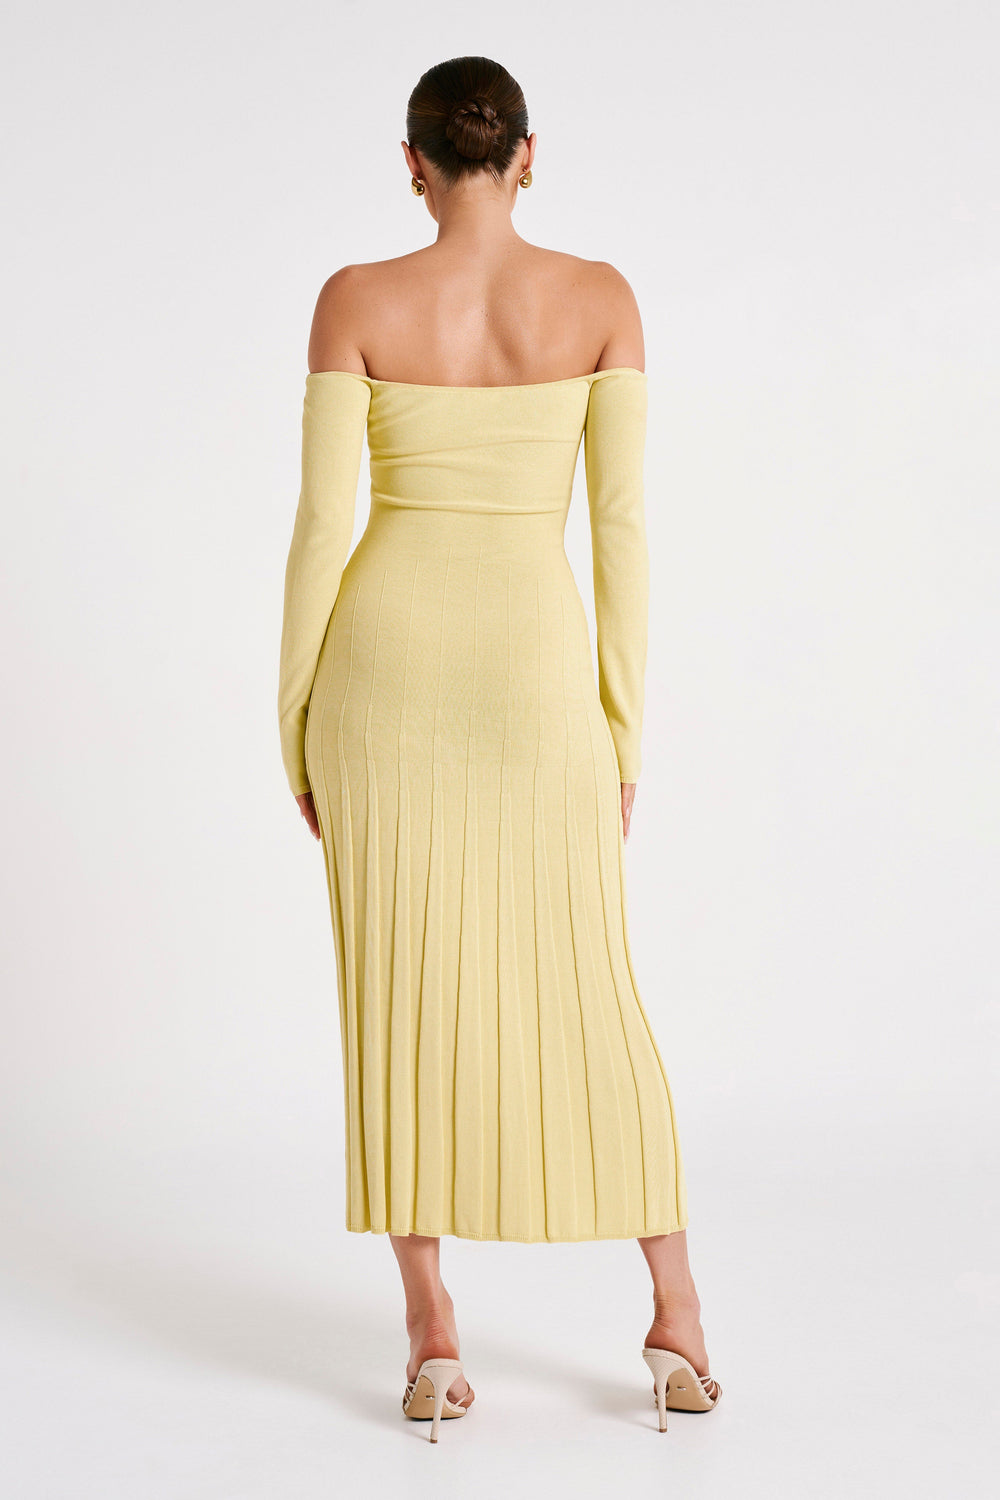 Emmeline Long Sleeve Rib Knit Midi Dress - Lemon